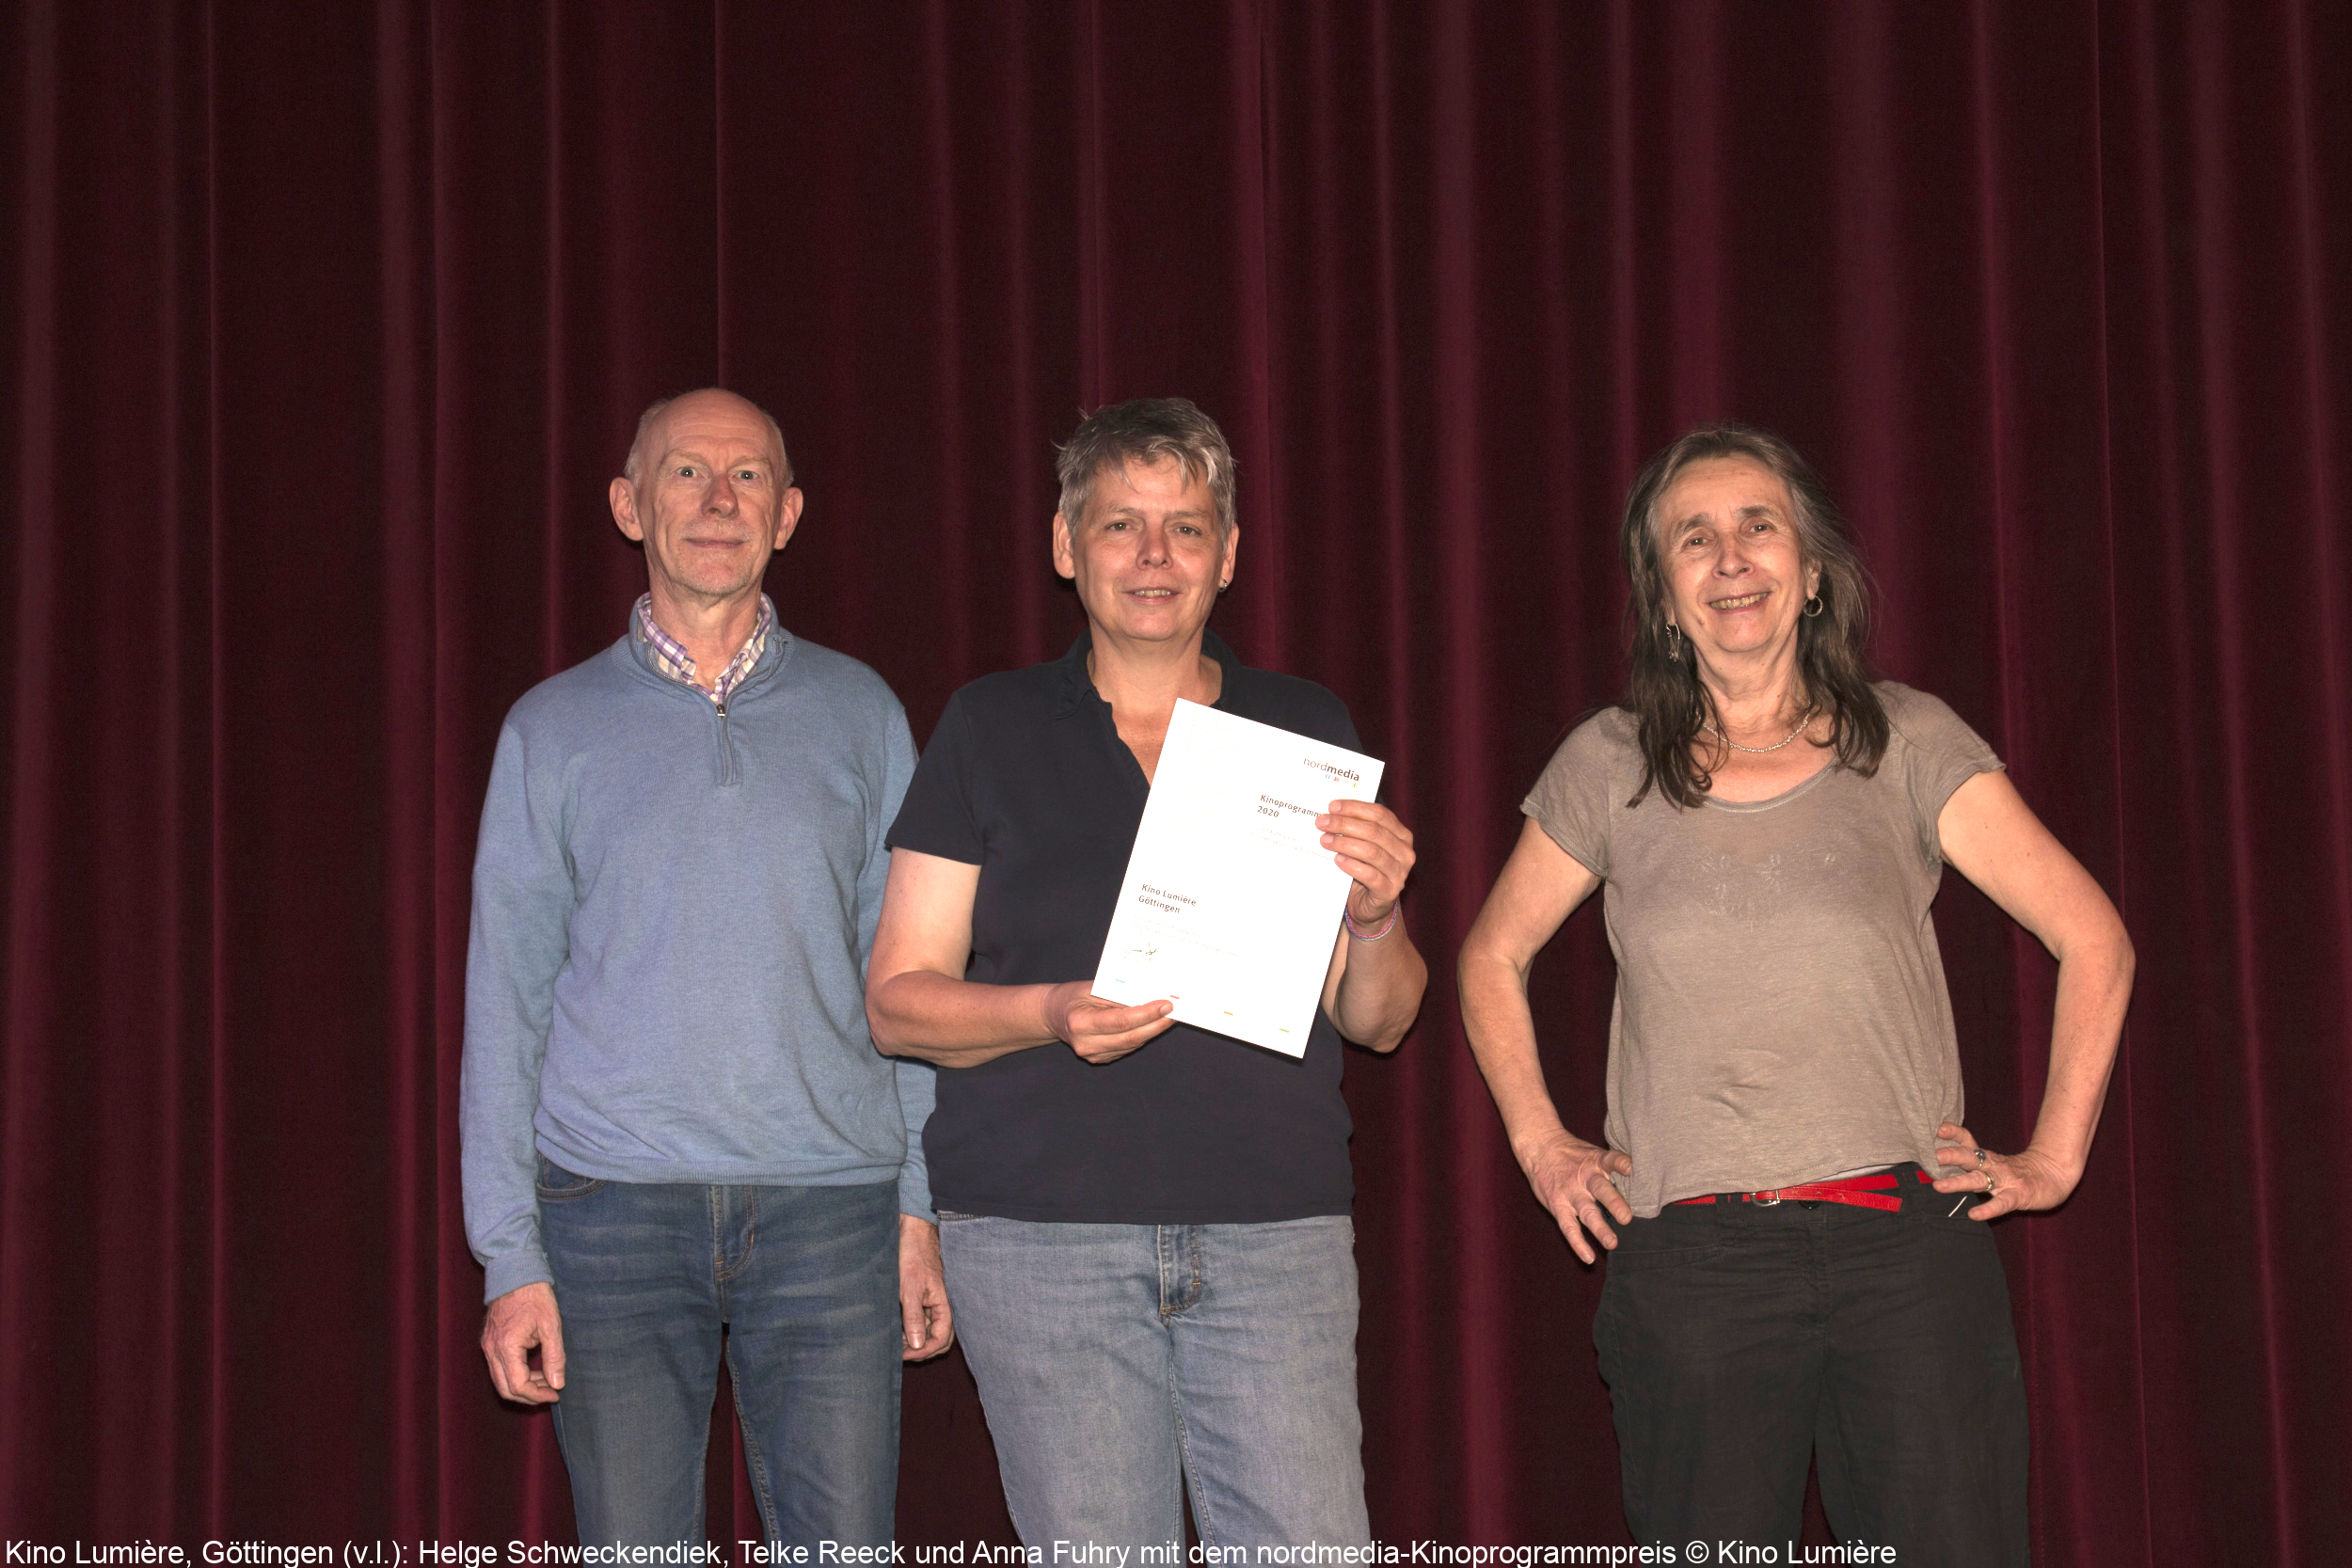 Kino Lumière, Göttingen (v.l.): Helge Schweckendiek, Telke Reeck und Anna Fuhry mit dem nordmedia-Kinoprogrammpreis © Kino Lumière